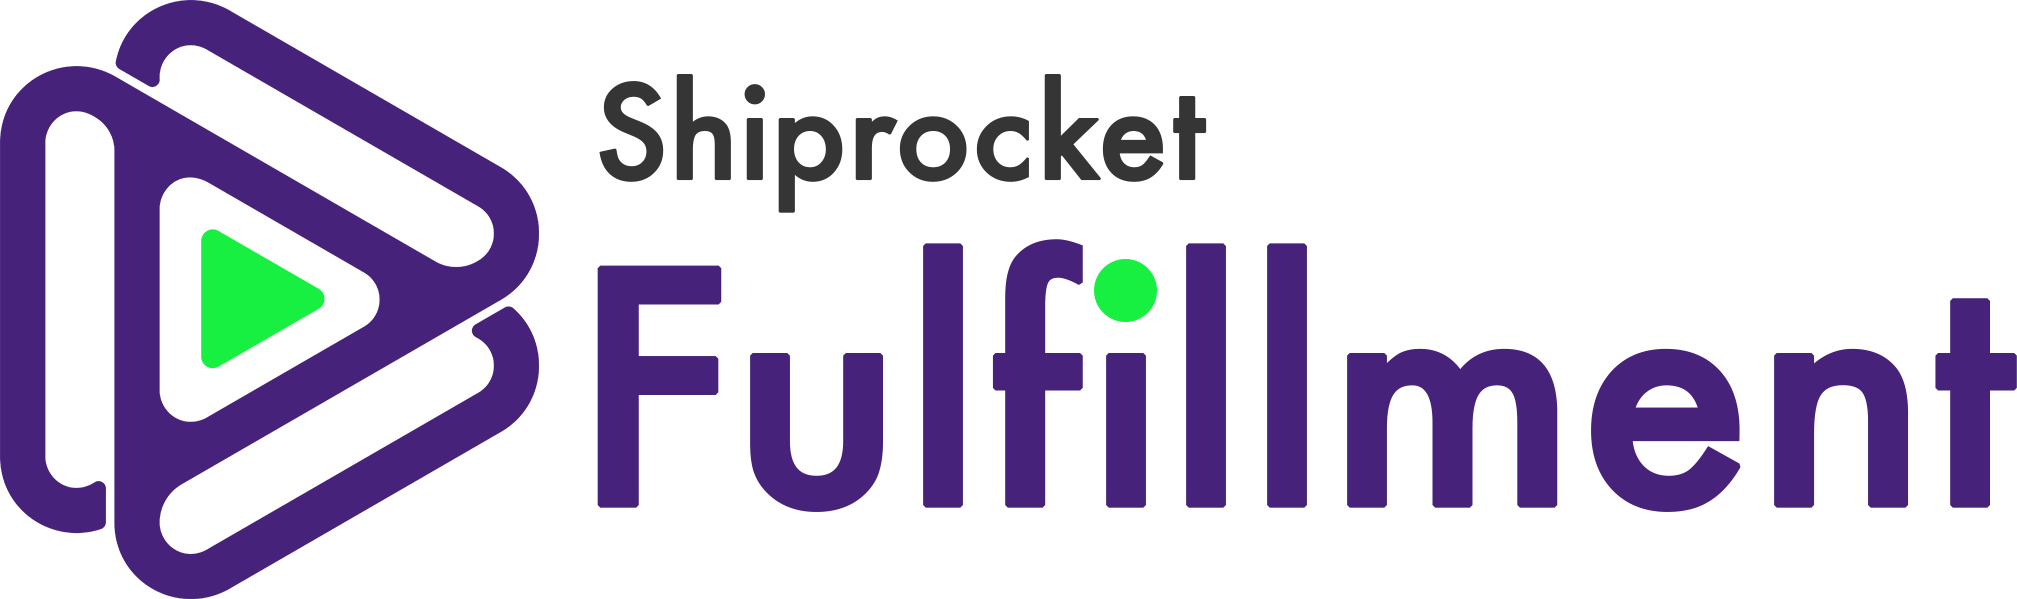 Shiprocket Fulfillment logo